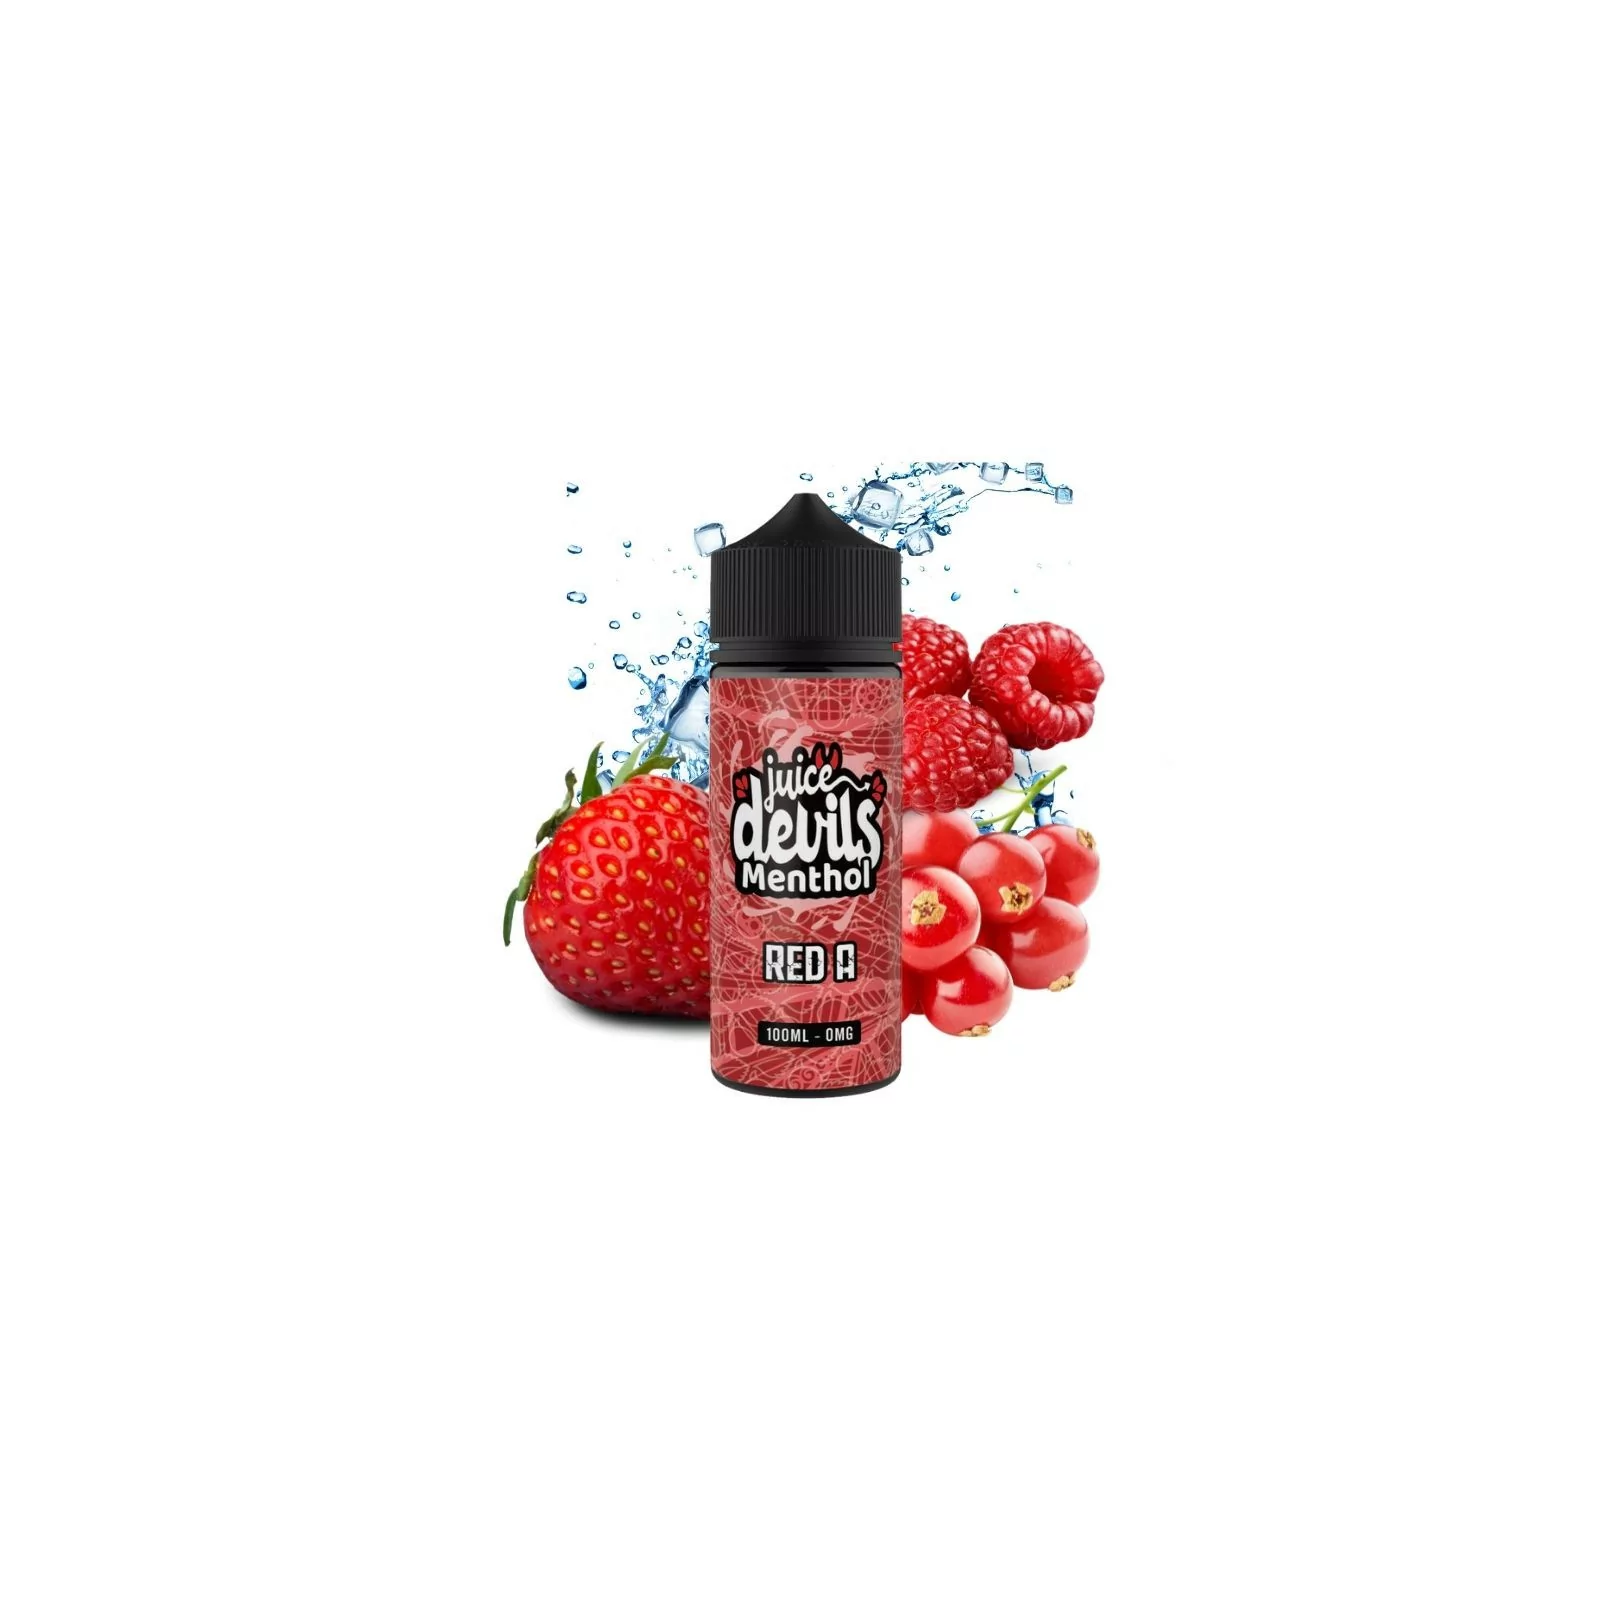 Red A Menthol 100ml - Juice Devils